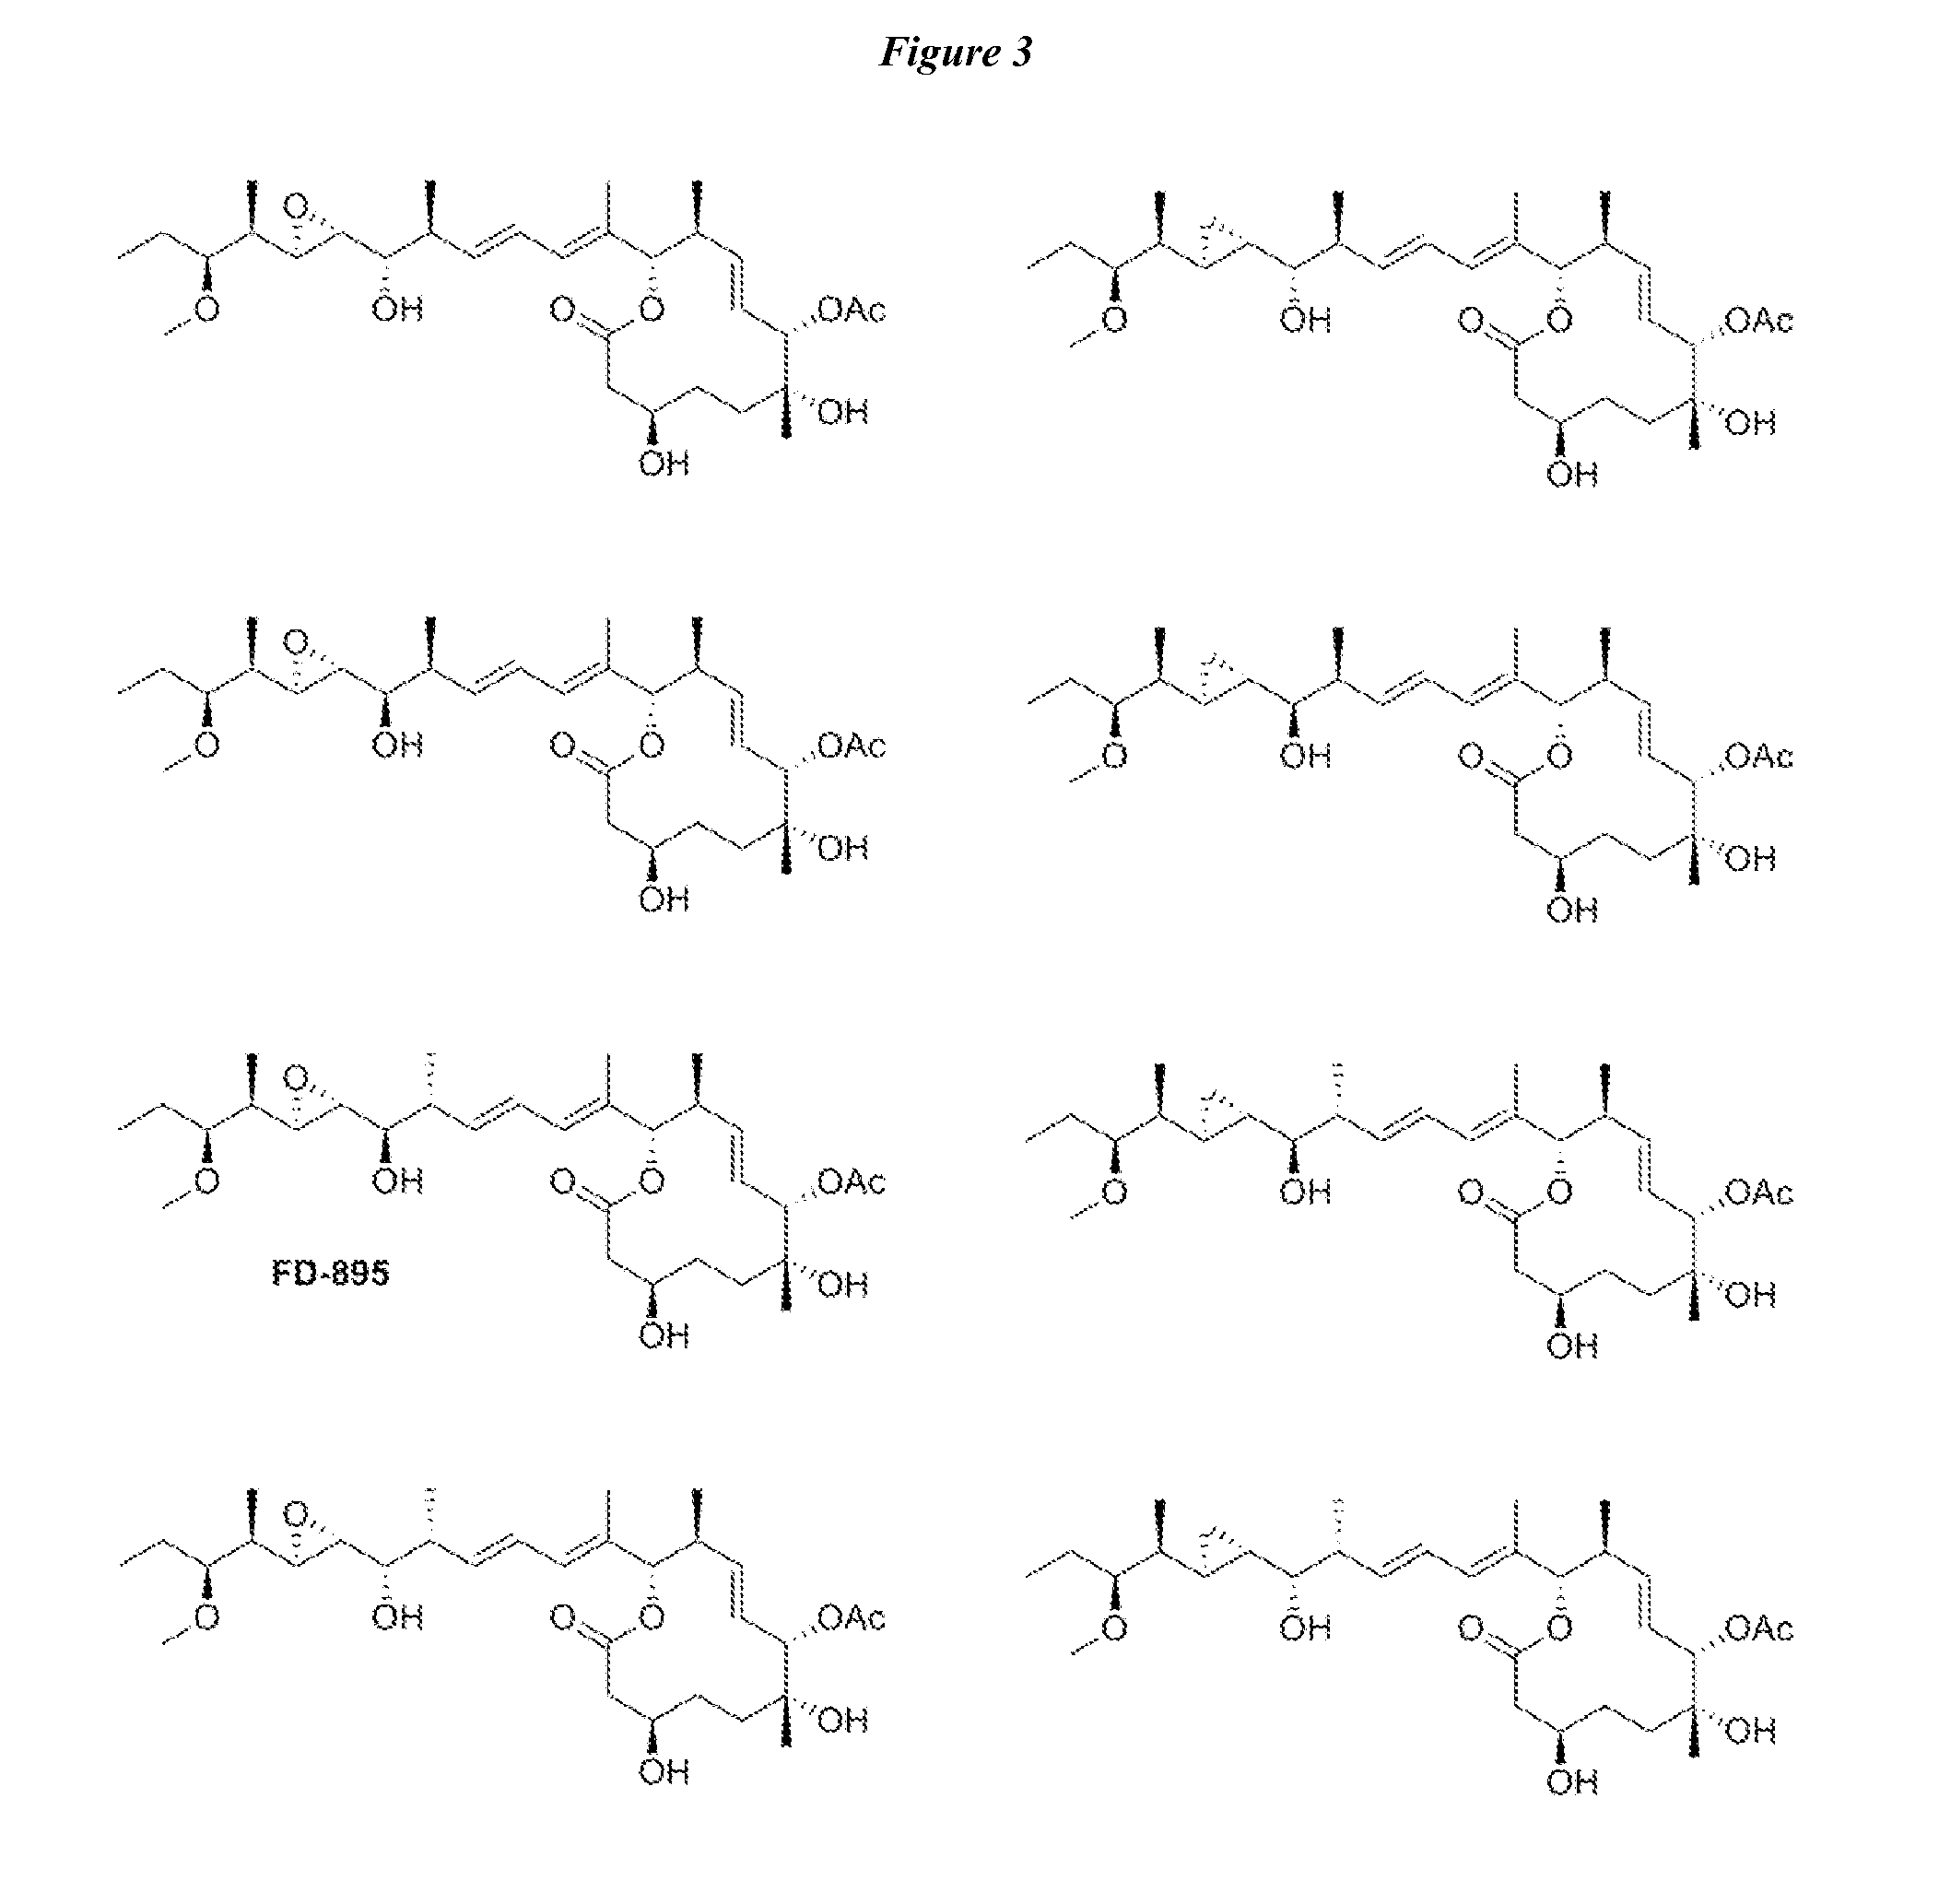 Anti-cancer polyketide compounds